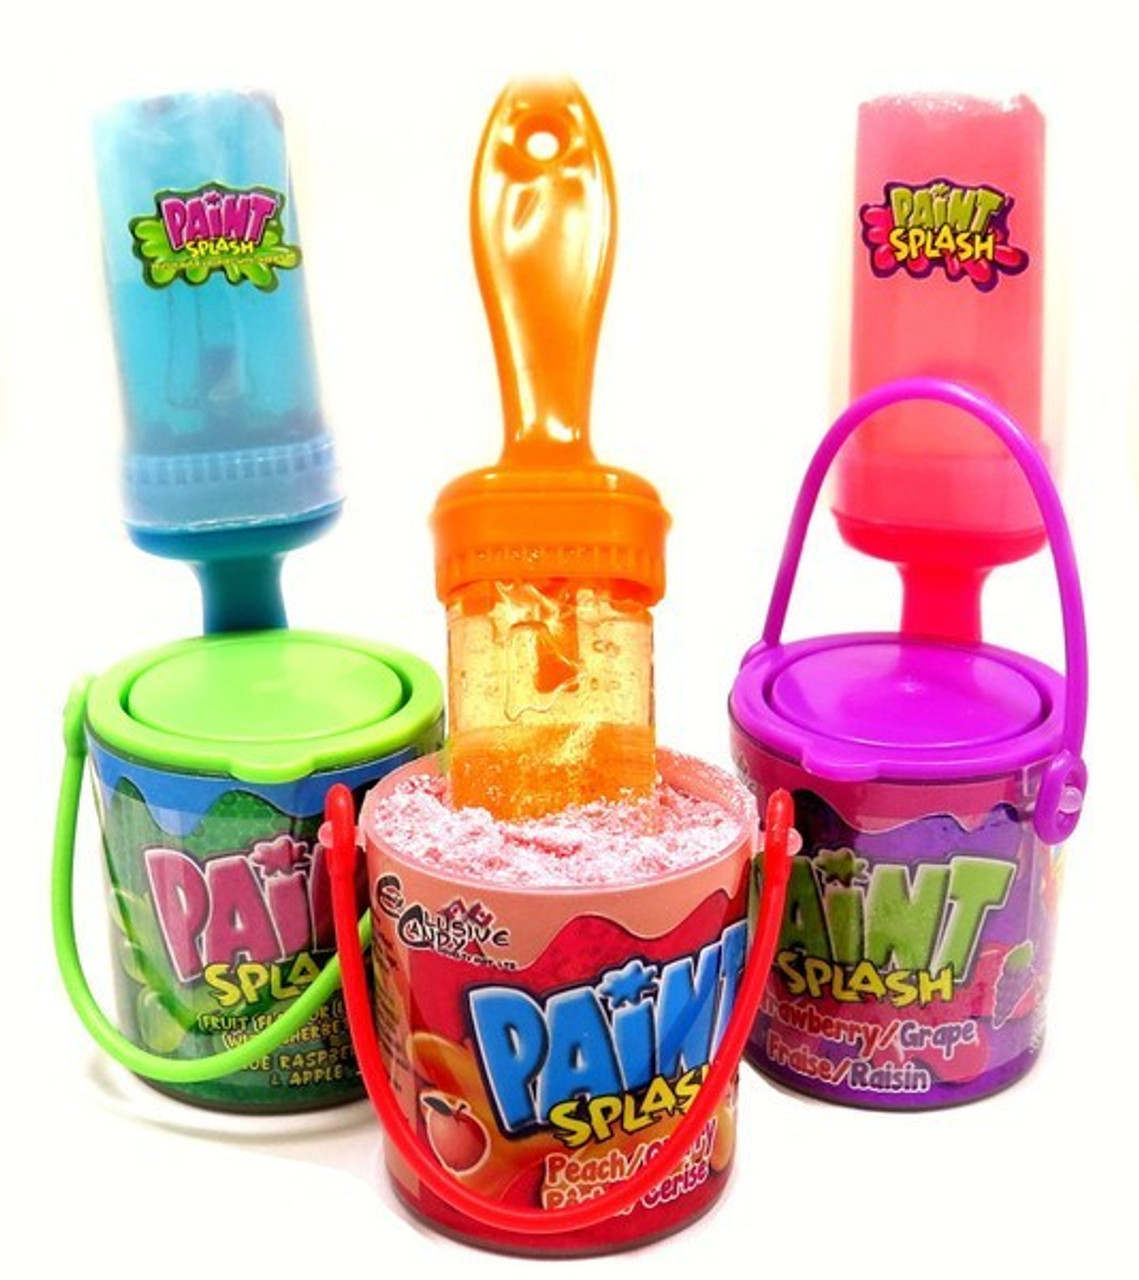 Paint Splash Candy Dip and Lollipop Brush